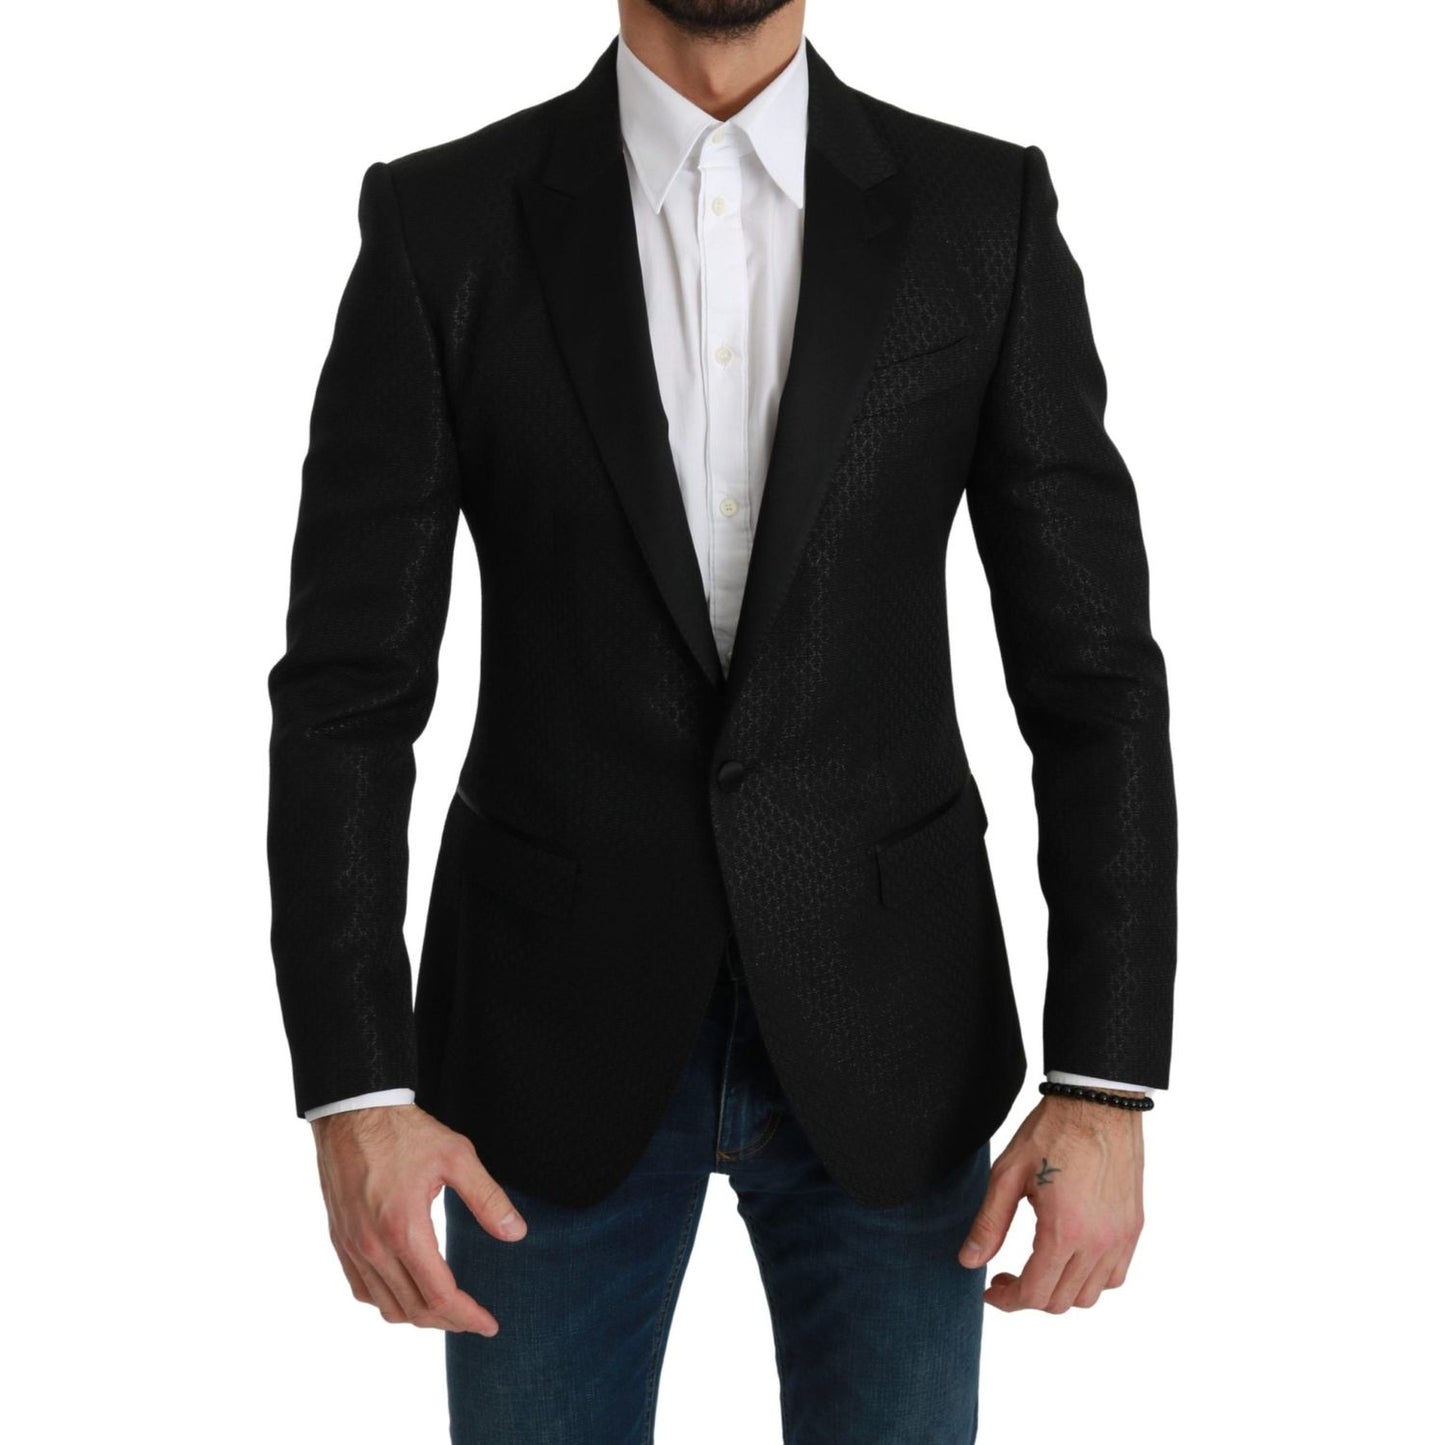 Dolce & Gabbana Slim Fit Martini Black Blazer Jacket black-slim-fit-jacket-martini-blazer Suit IMG_1013-scaled-7e4e80ca-4c8.jpg